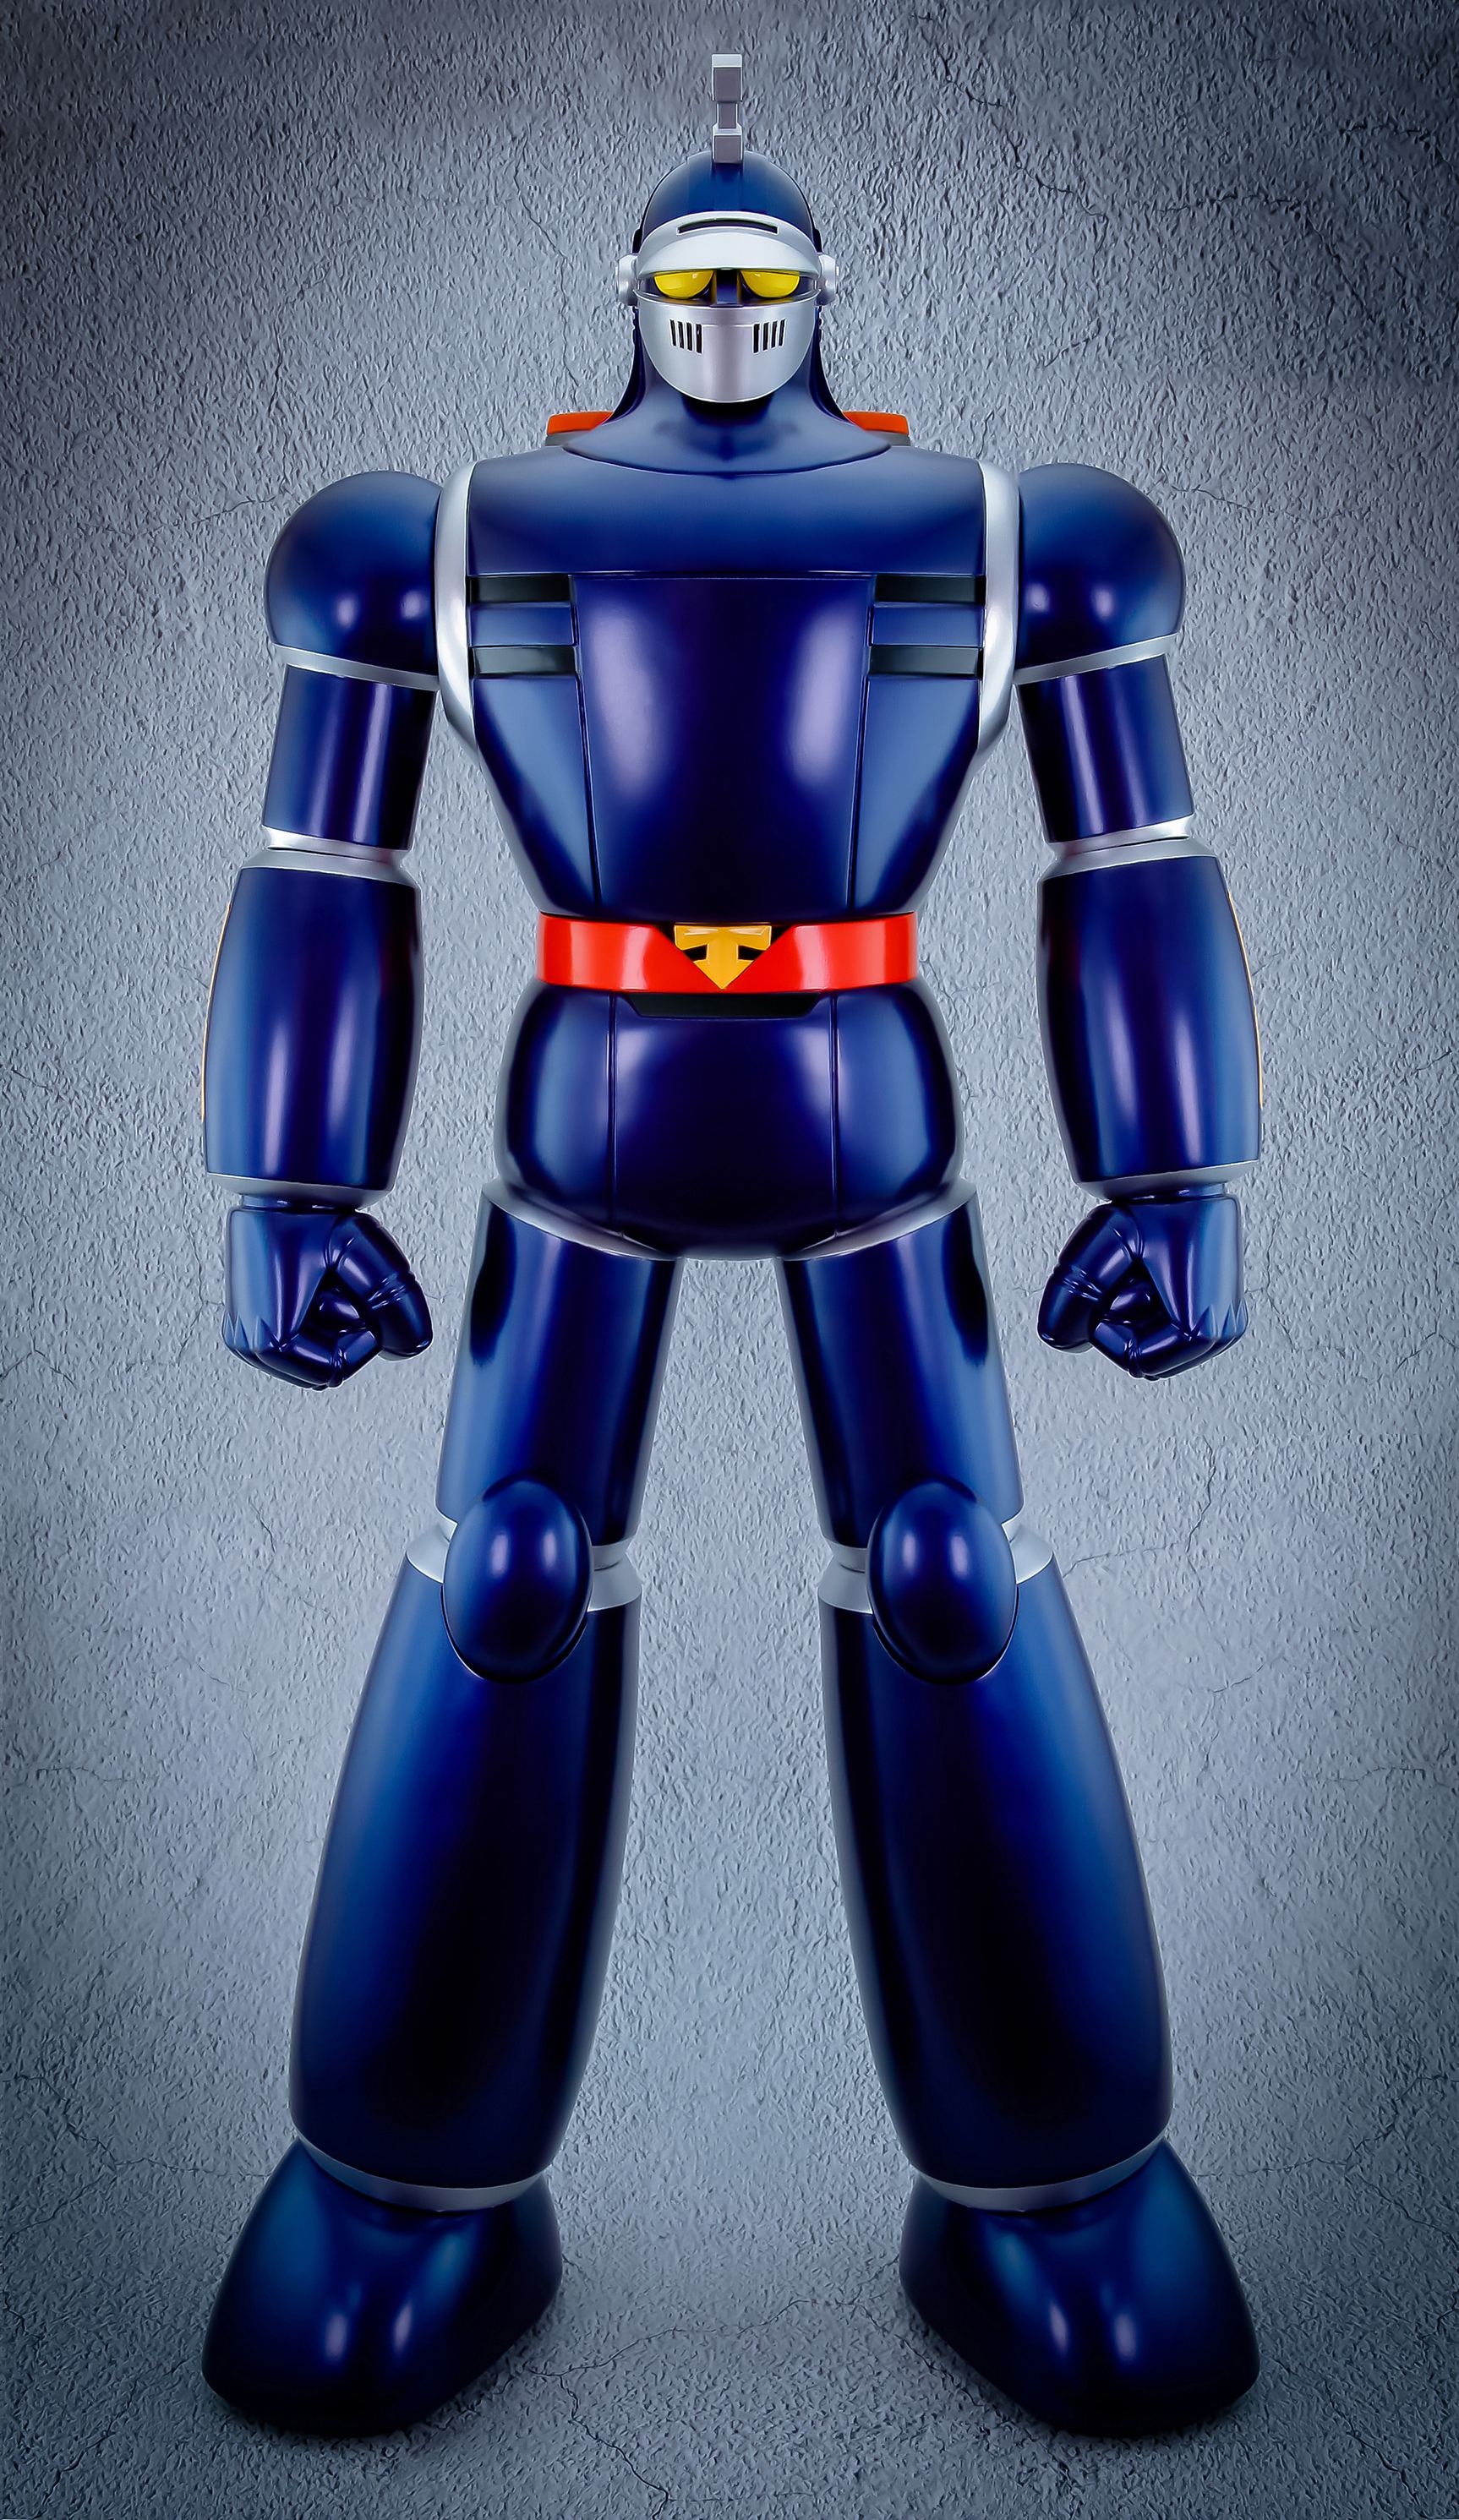 SUPER ROBOT VINYL COLLECTION THE NEW ADVENTURES OF GIGANTOR: TETSUJIN 28-GO Action Toys